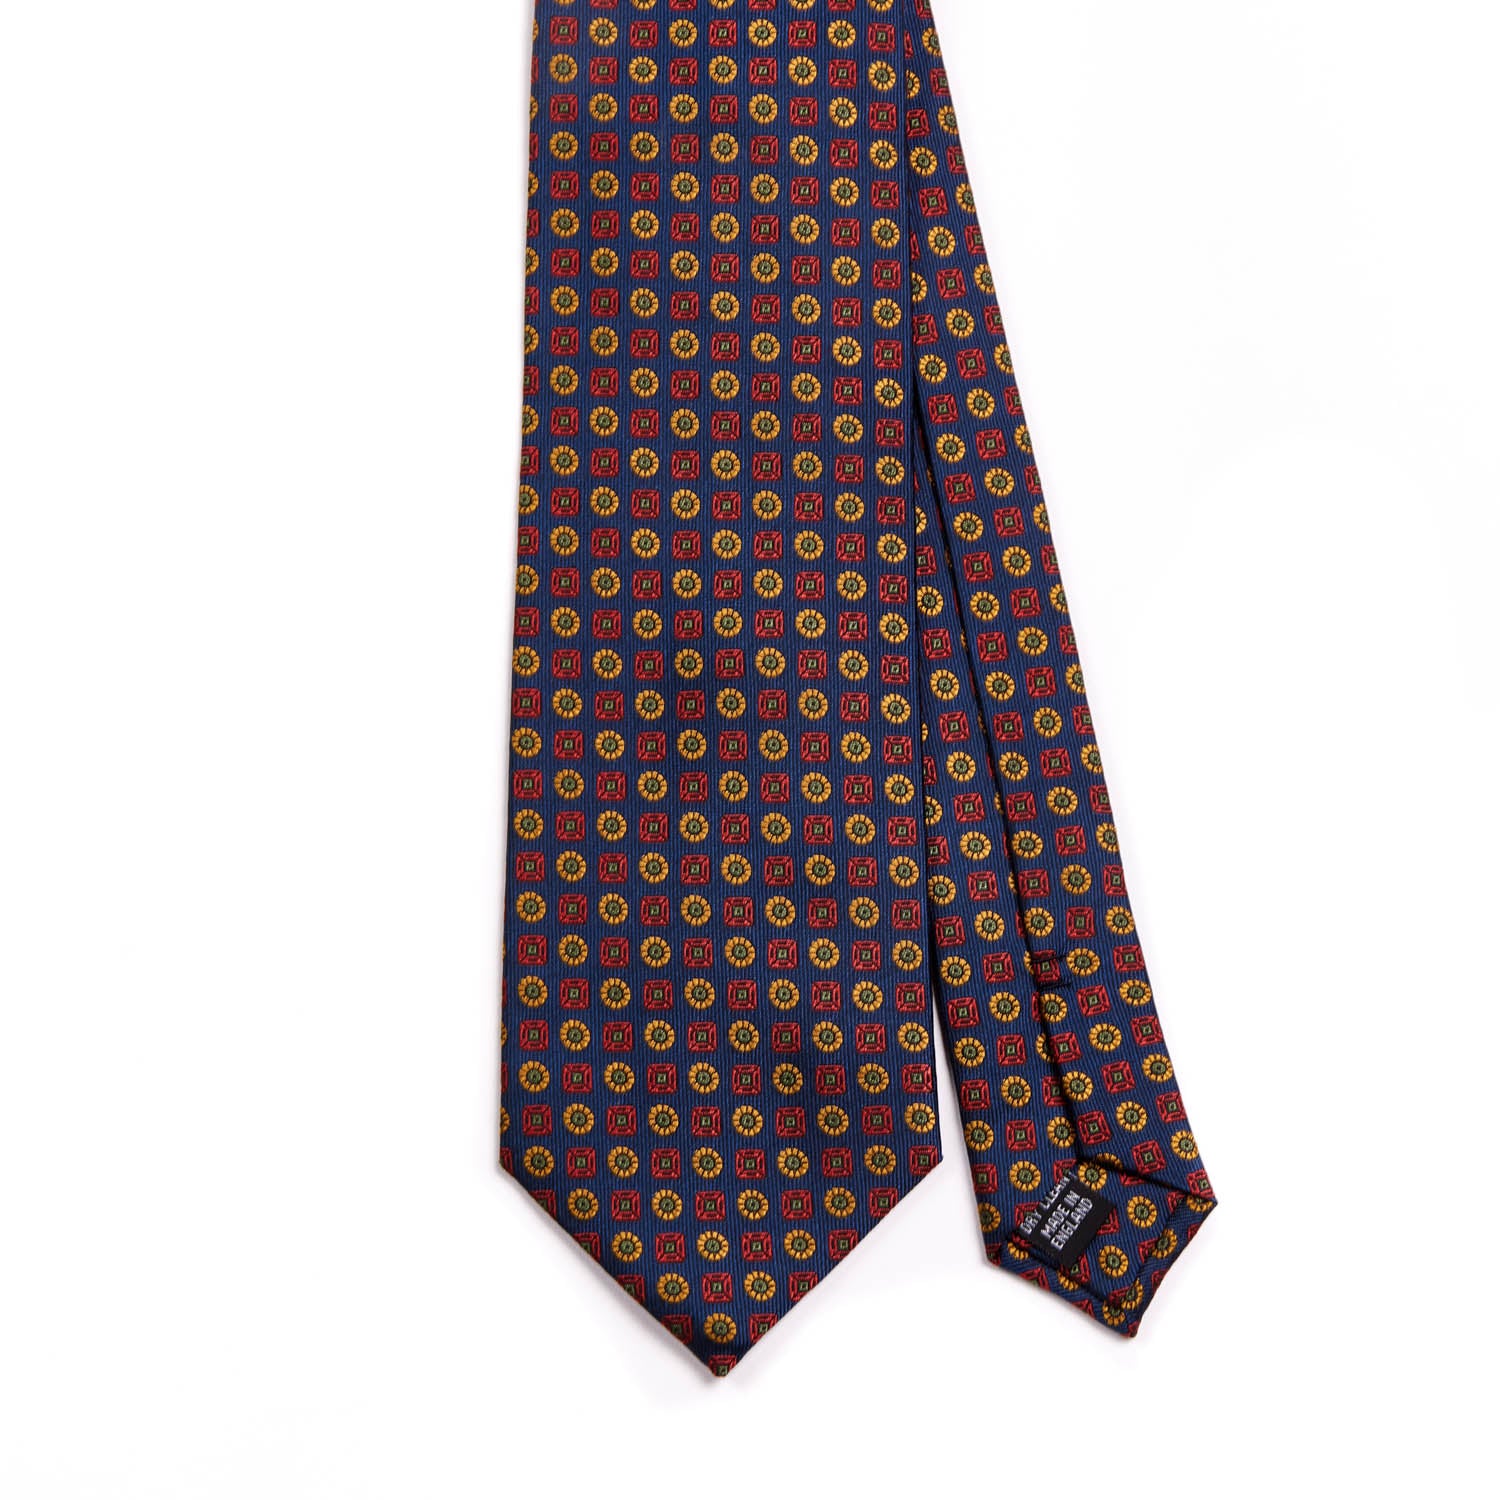 Sovereign Grade Navy Floral Jacquard Tie, 150 cm